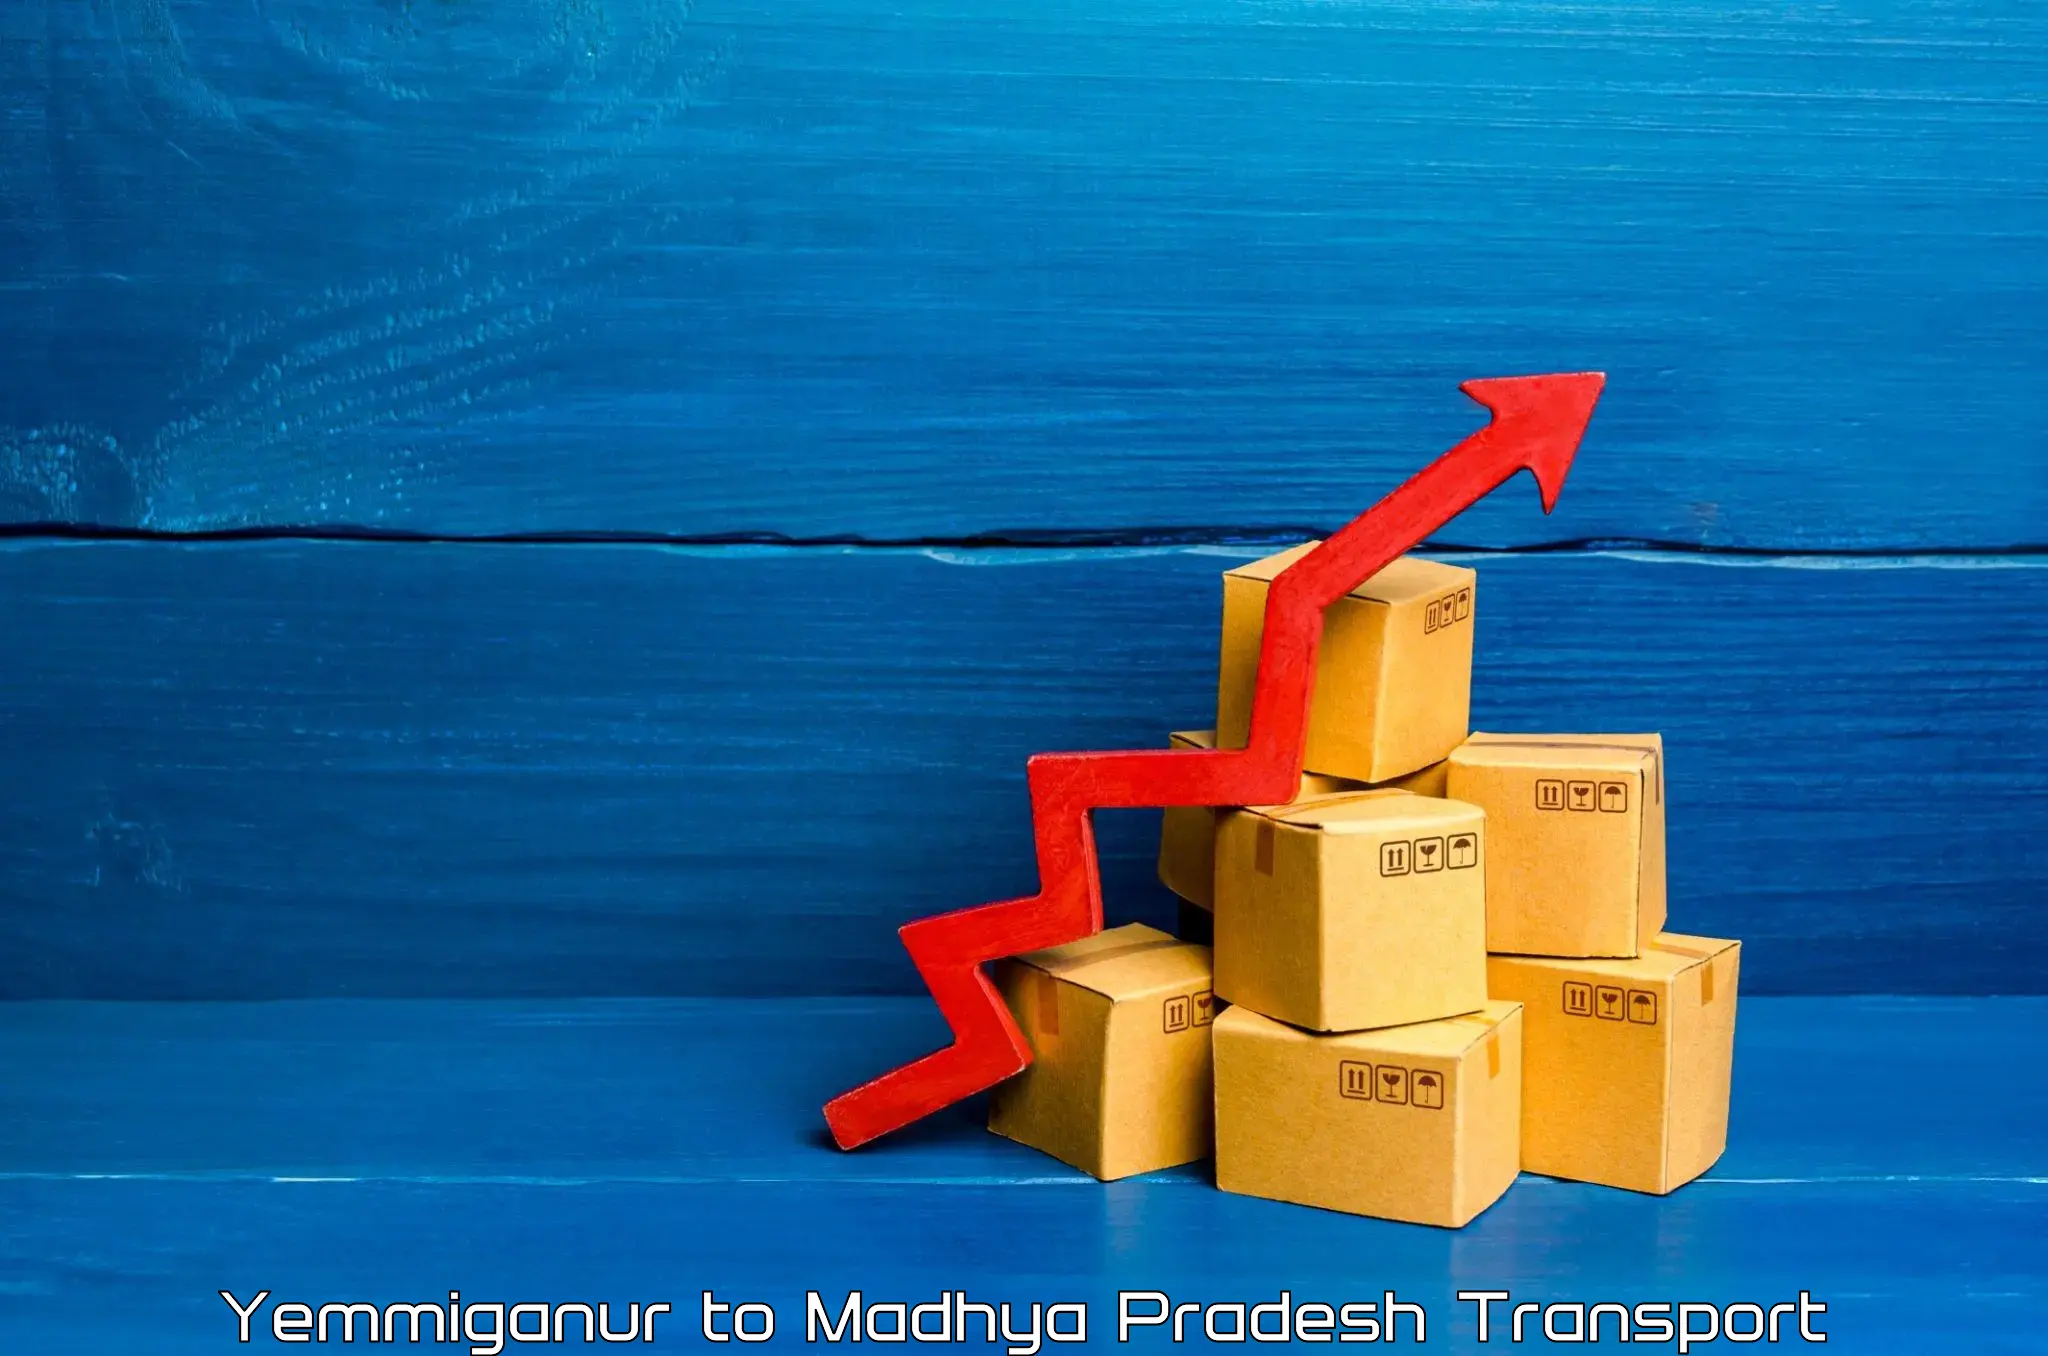 International cargo transportation services Yemmiganur to Silwani